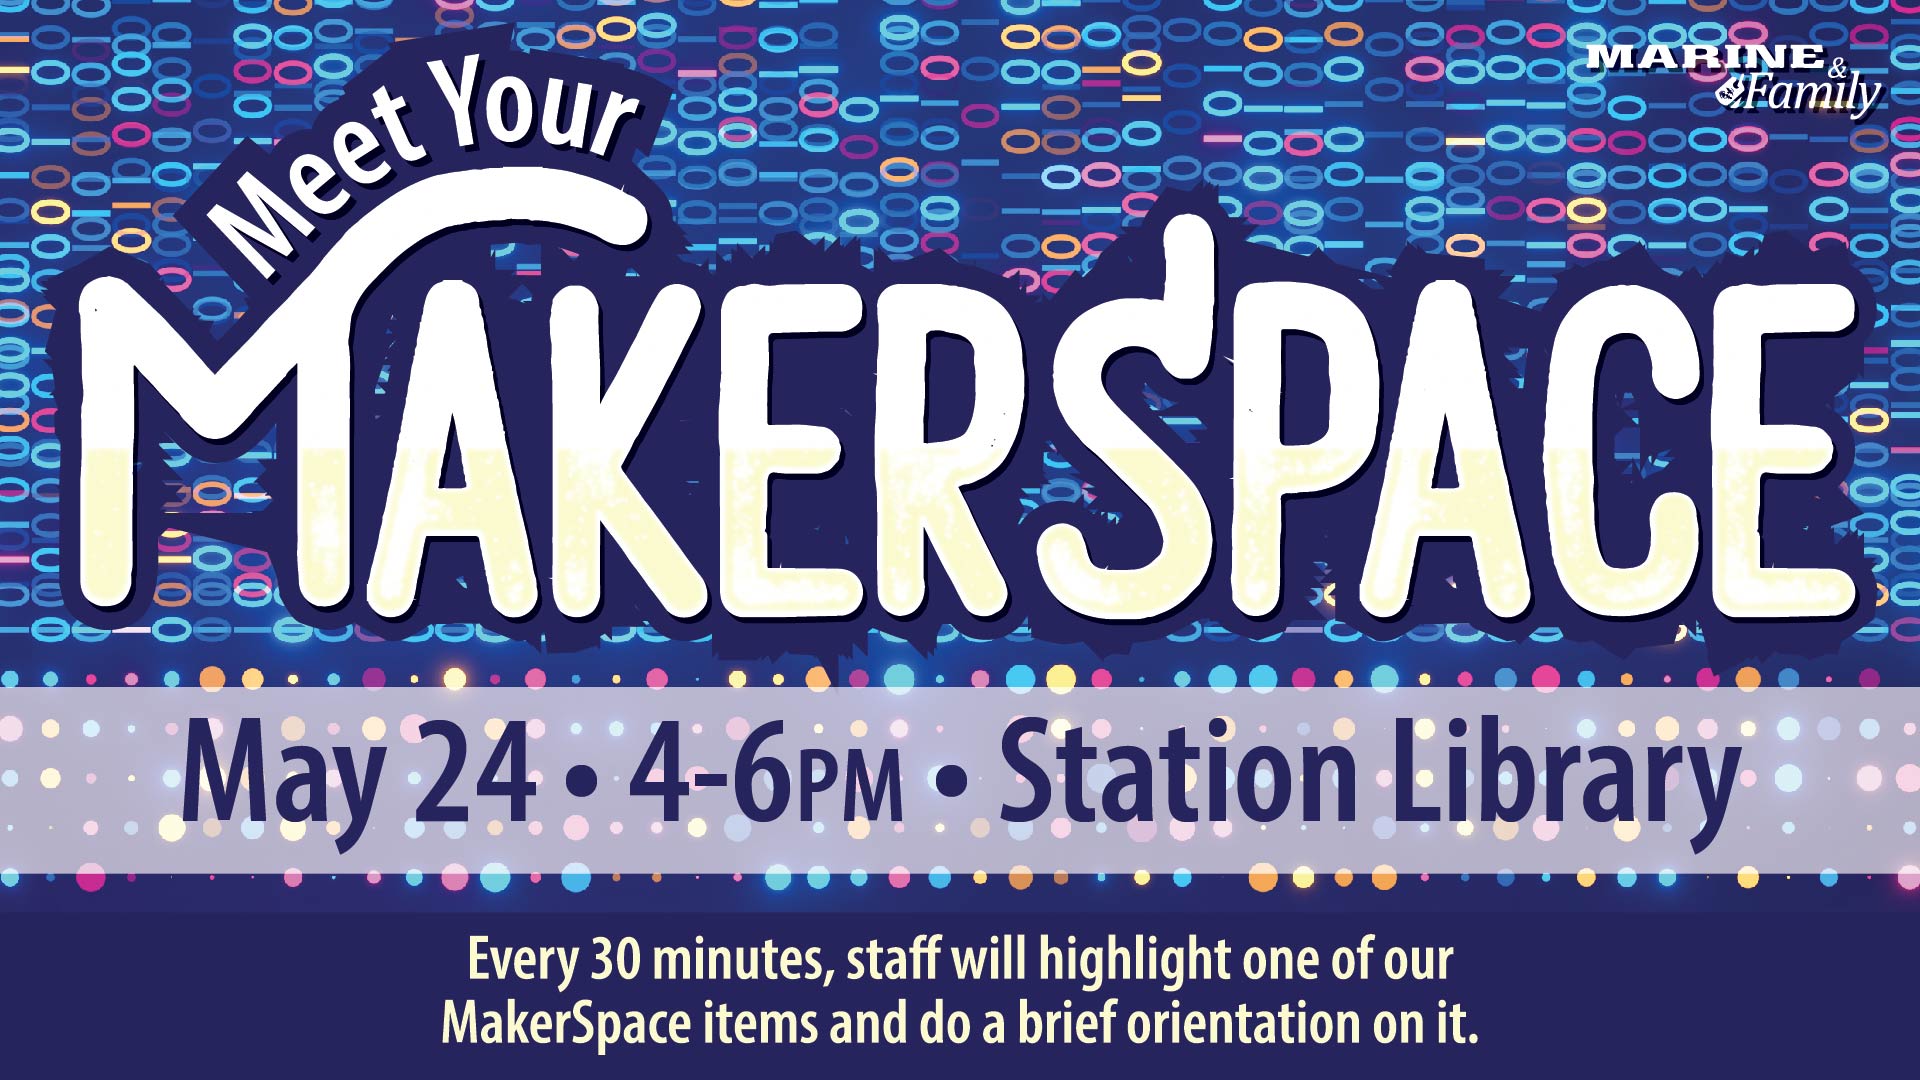 Meet Your MakerSpace